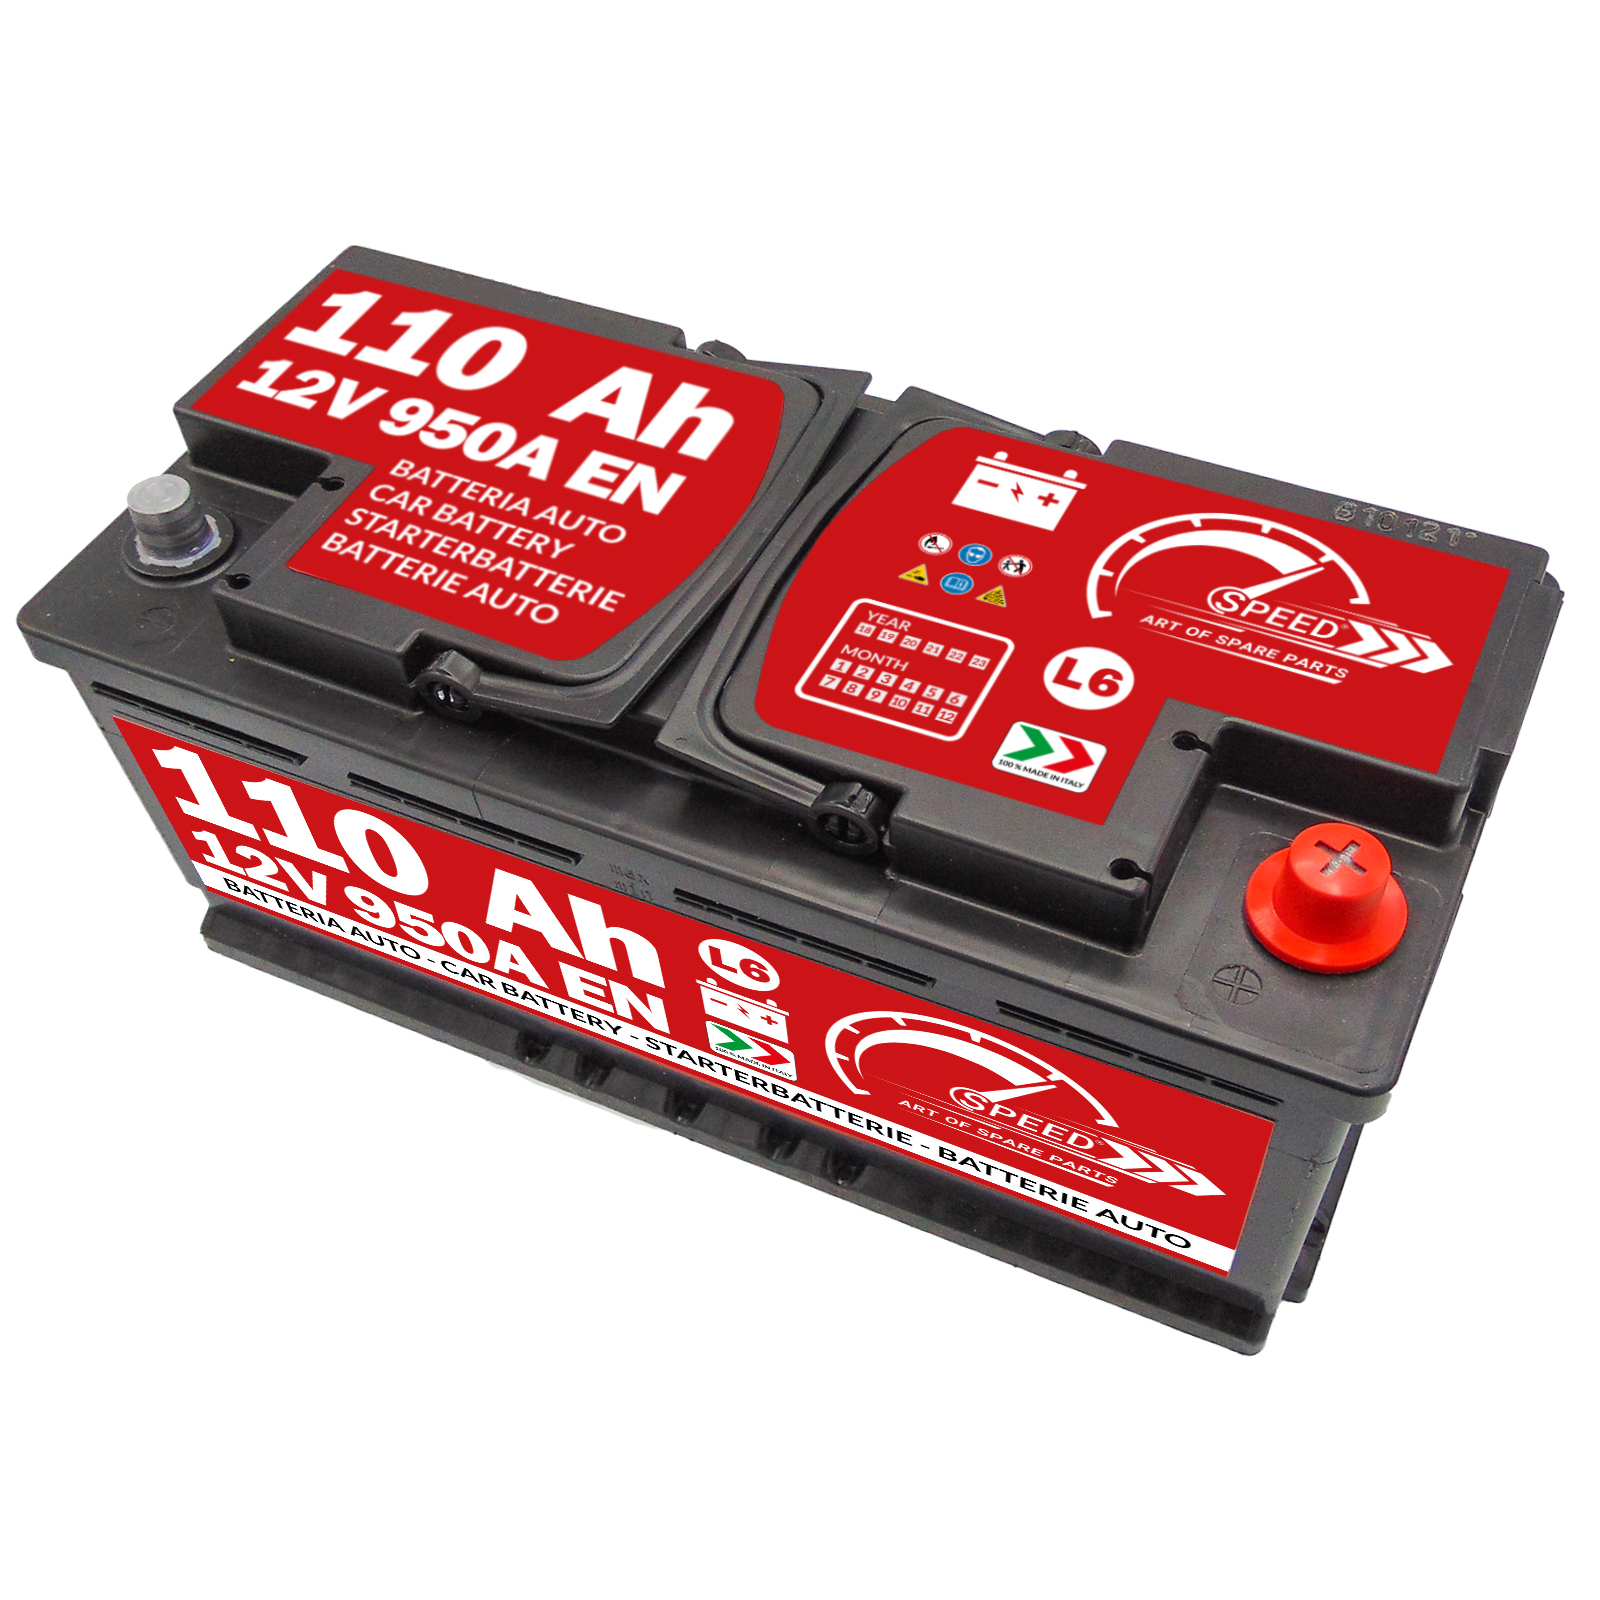 Autobatterie 12V 110Ah 950A L6 Speed Starterbatterie statt 88Ah